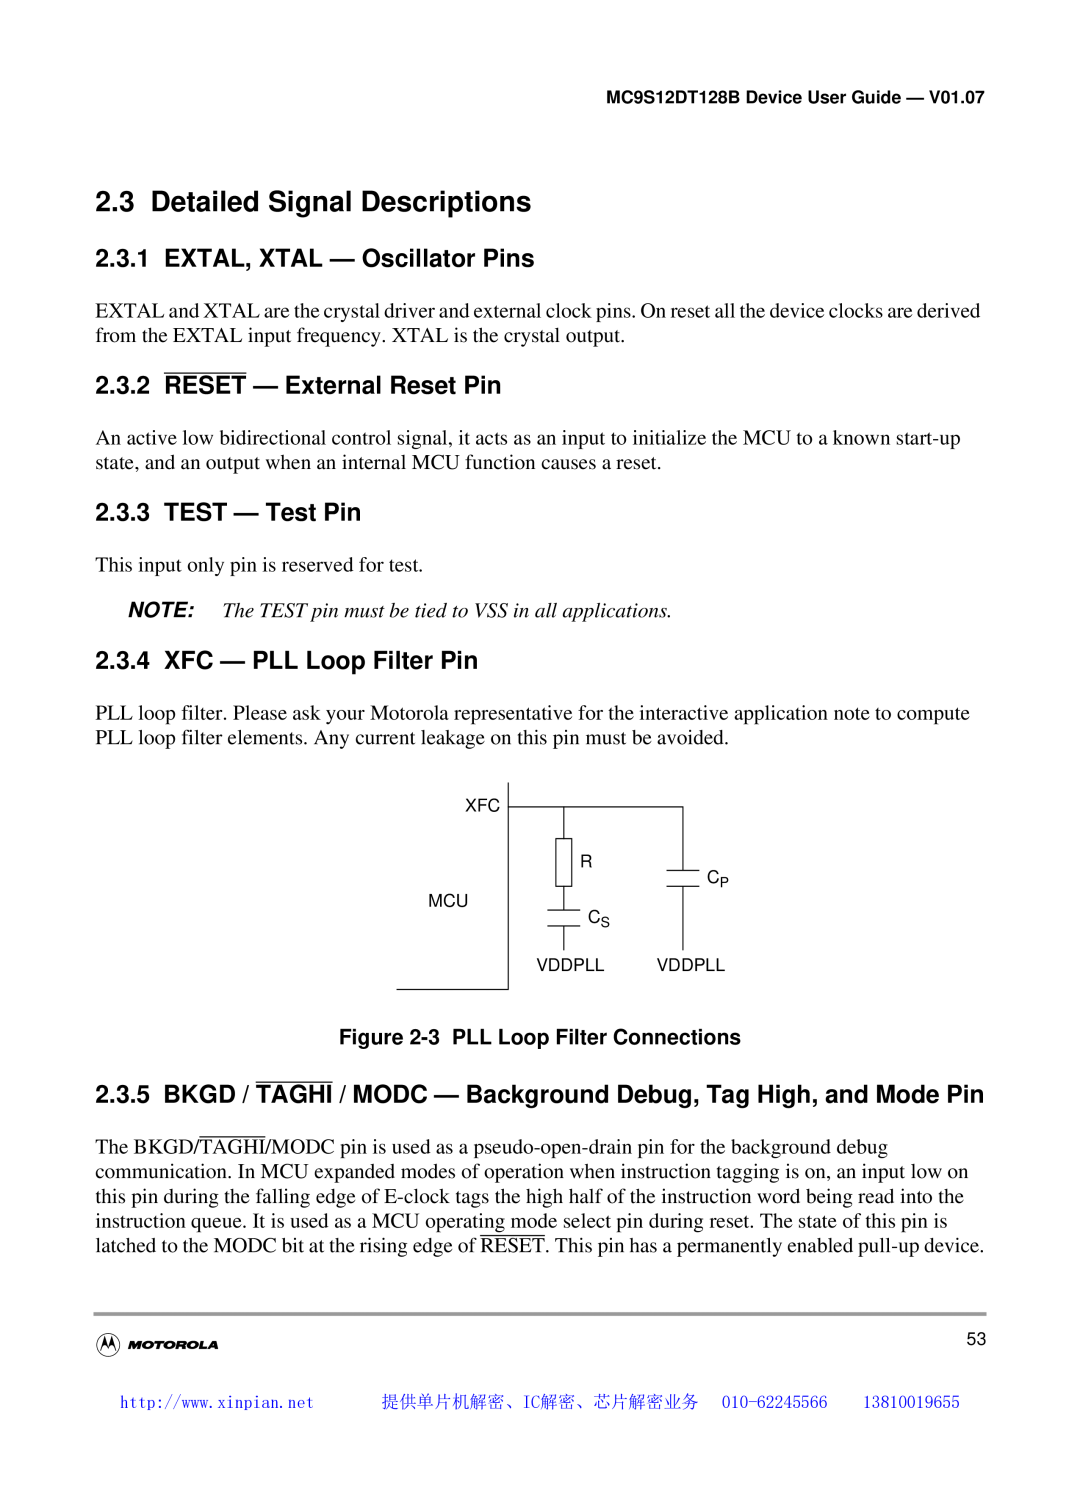 Motorola MC9S12DB128B manual Detailed Signal Descriptions, EXTAL, XTAL - Oscillator Pins, RESET - External Reset Pin 